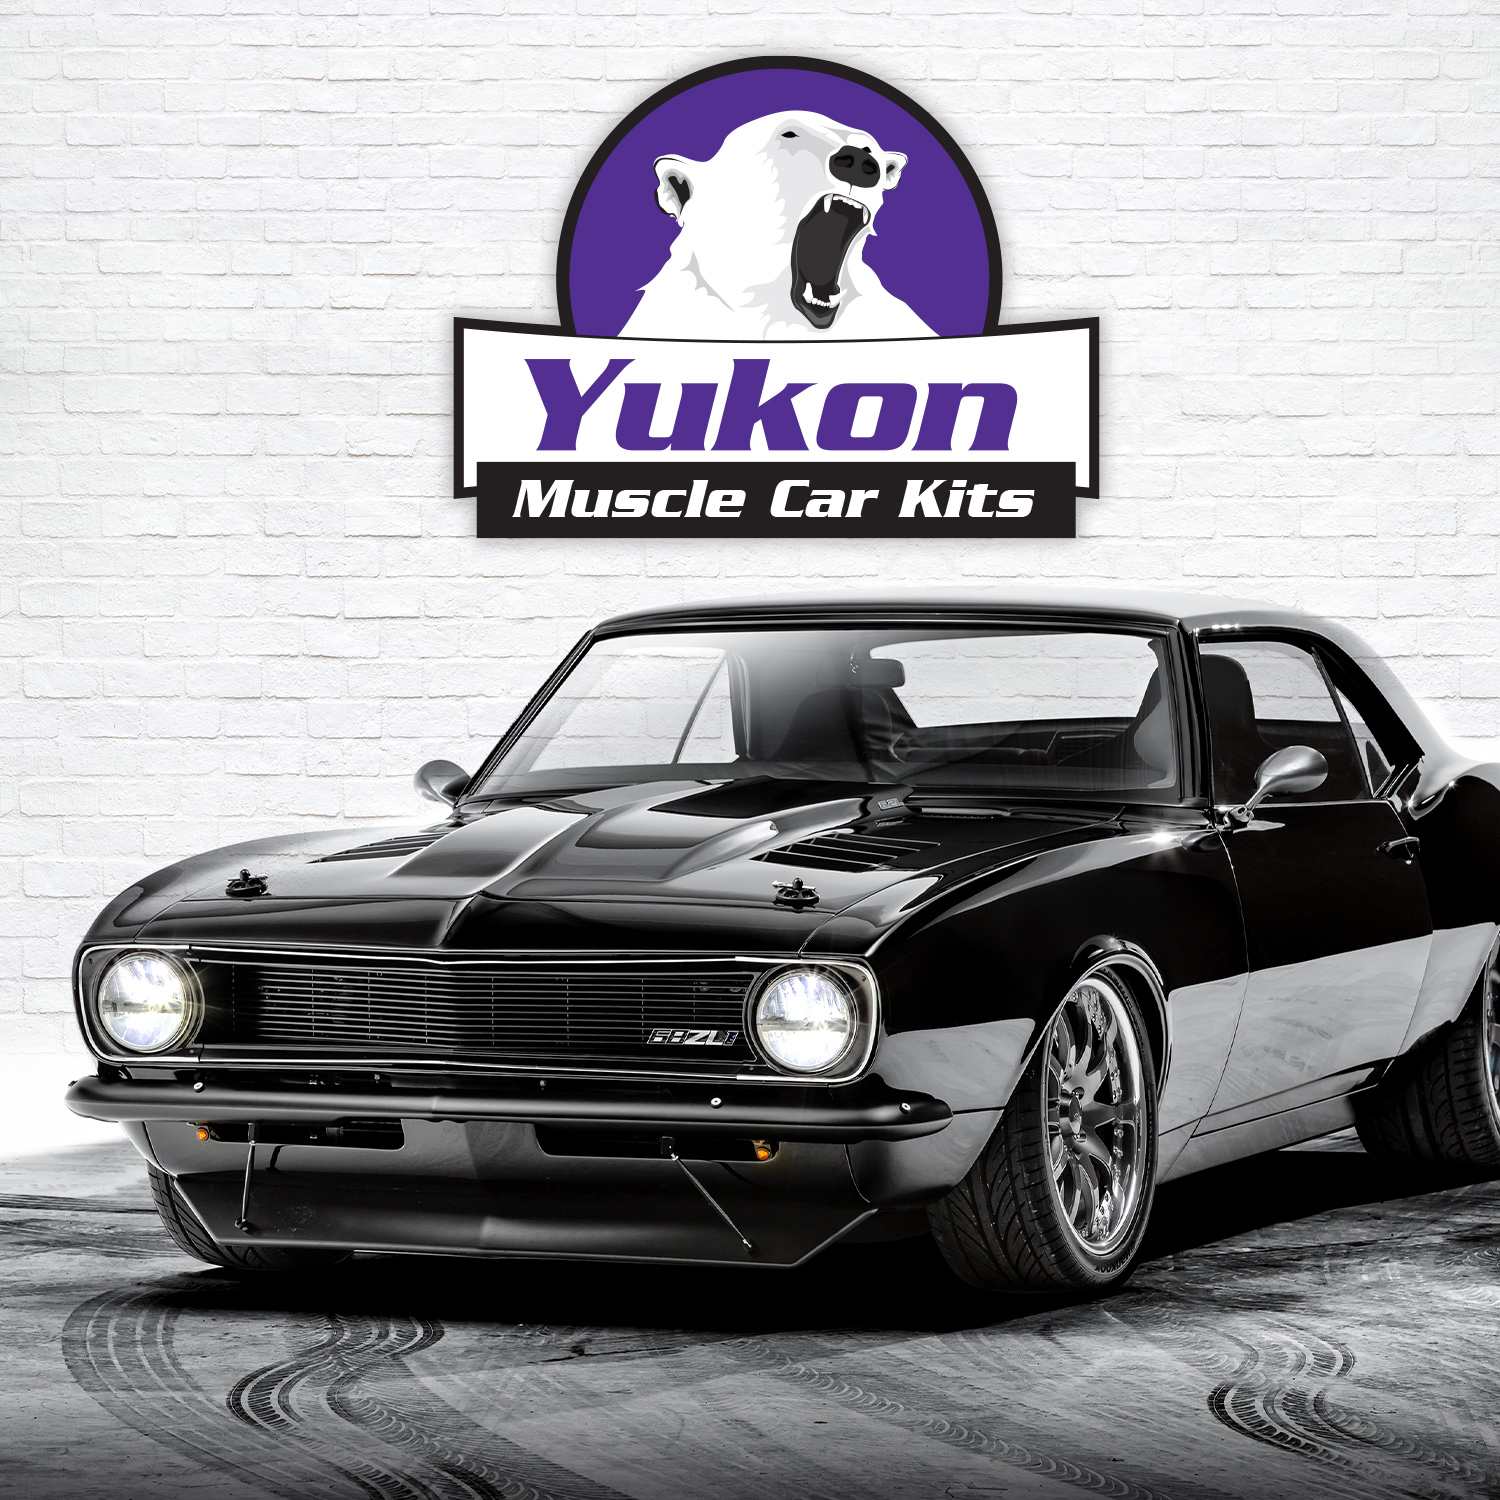 Yukon Muscle Car Limited Slip & Re-Gear Kit, Chrysler 8.75”, 29 spln, 3.55 ratio